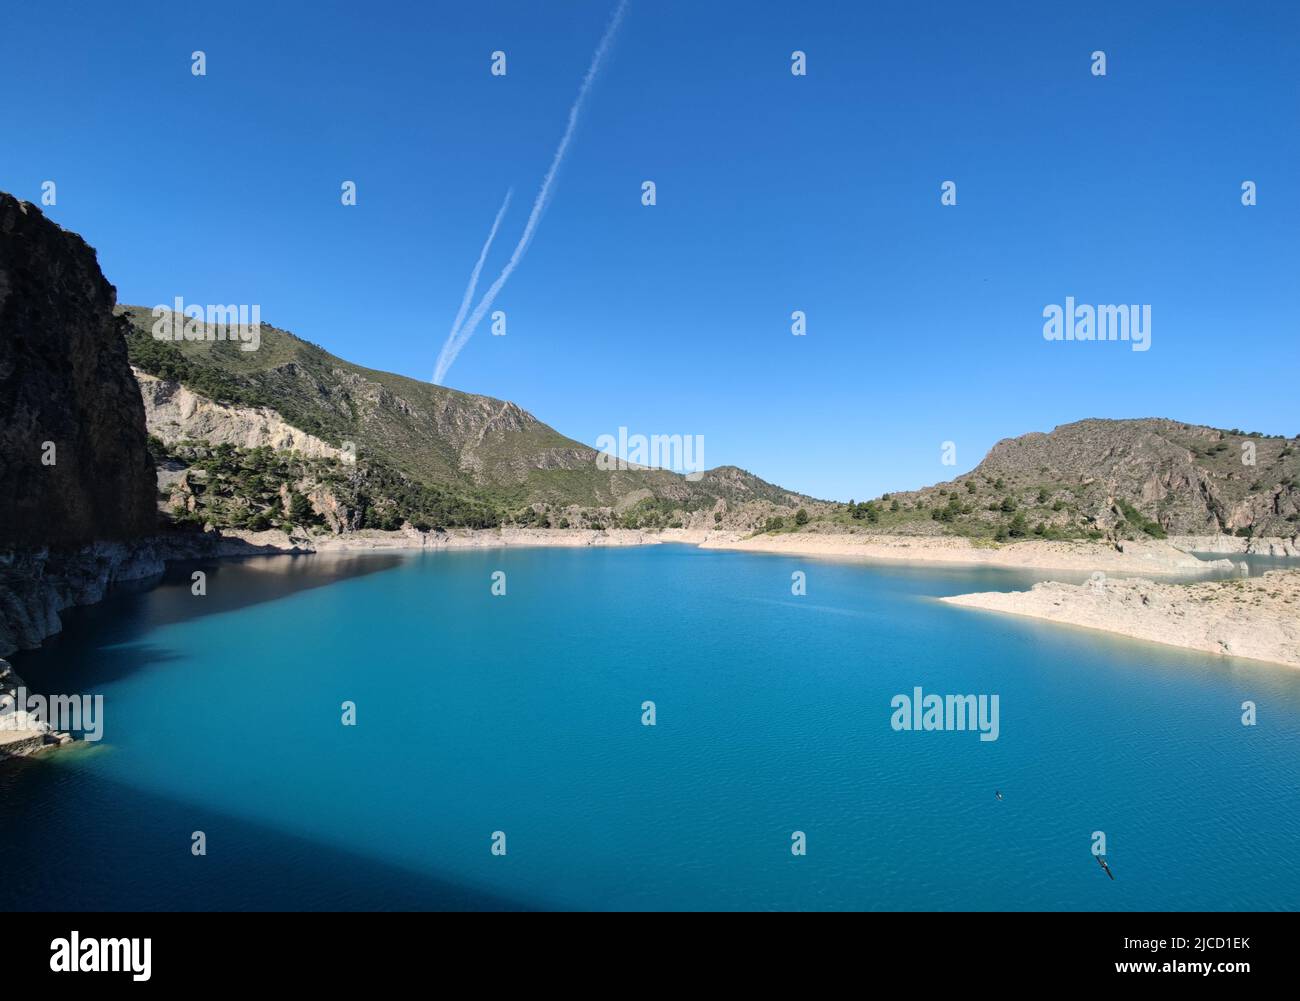 Atemberaubender blauer embalse de cenajo Stausee in den Bergen in der Nähe von cuenca, spanien Stockfoto